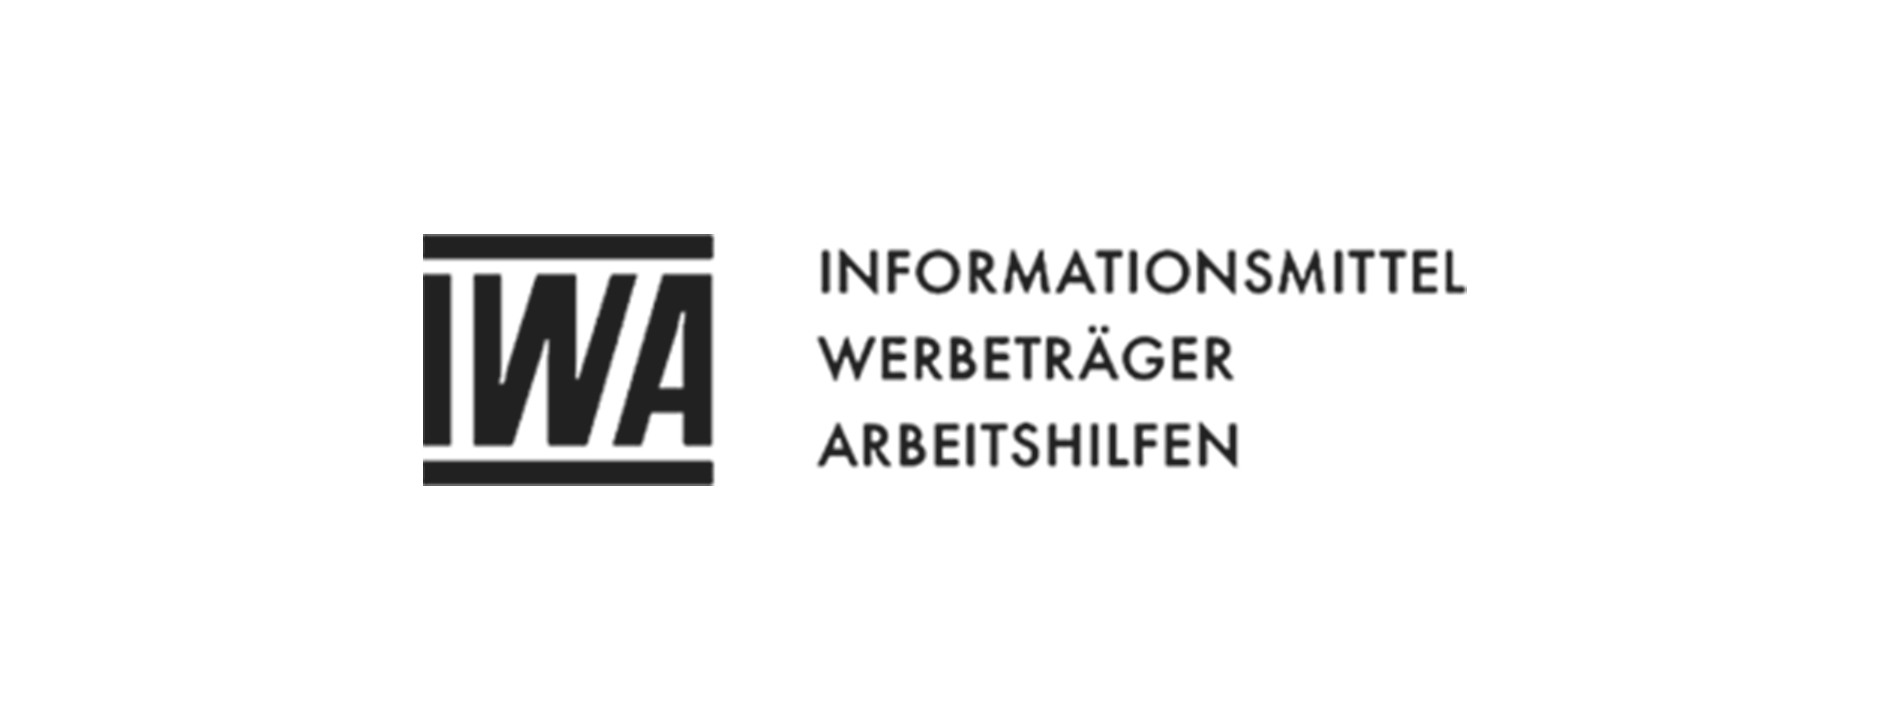 Iwa logo2 3x